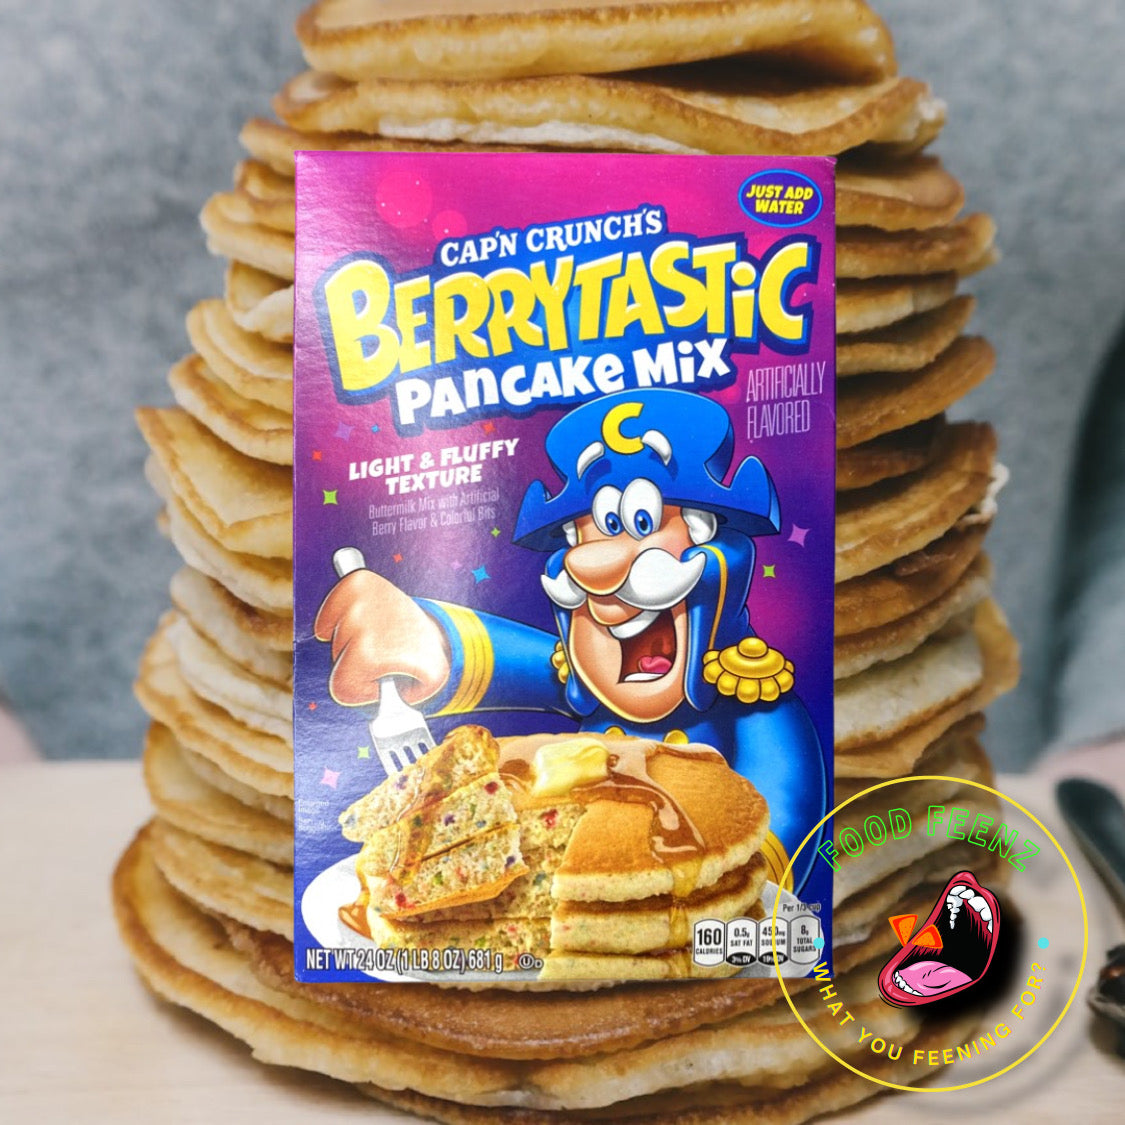 Cap'N Crunch's Berrytastic Pancake Mix